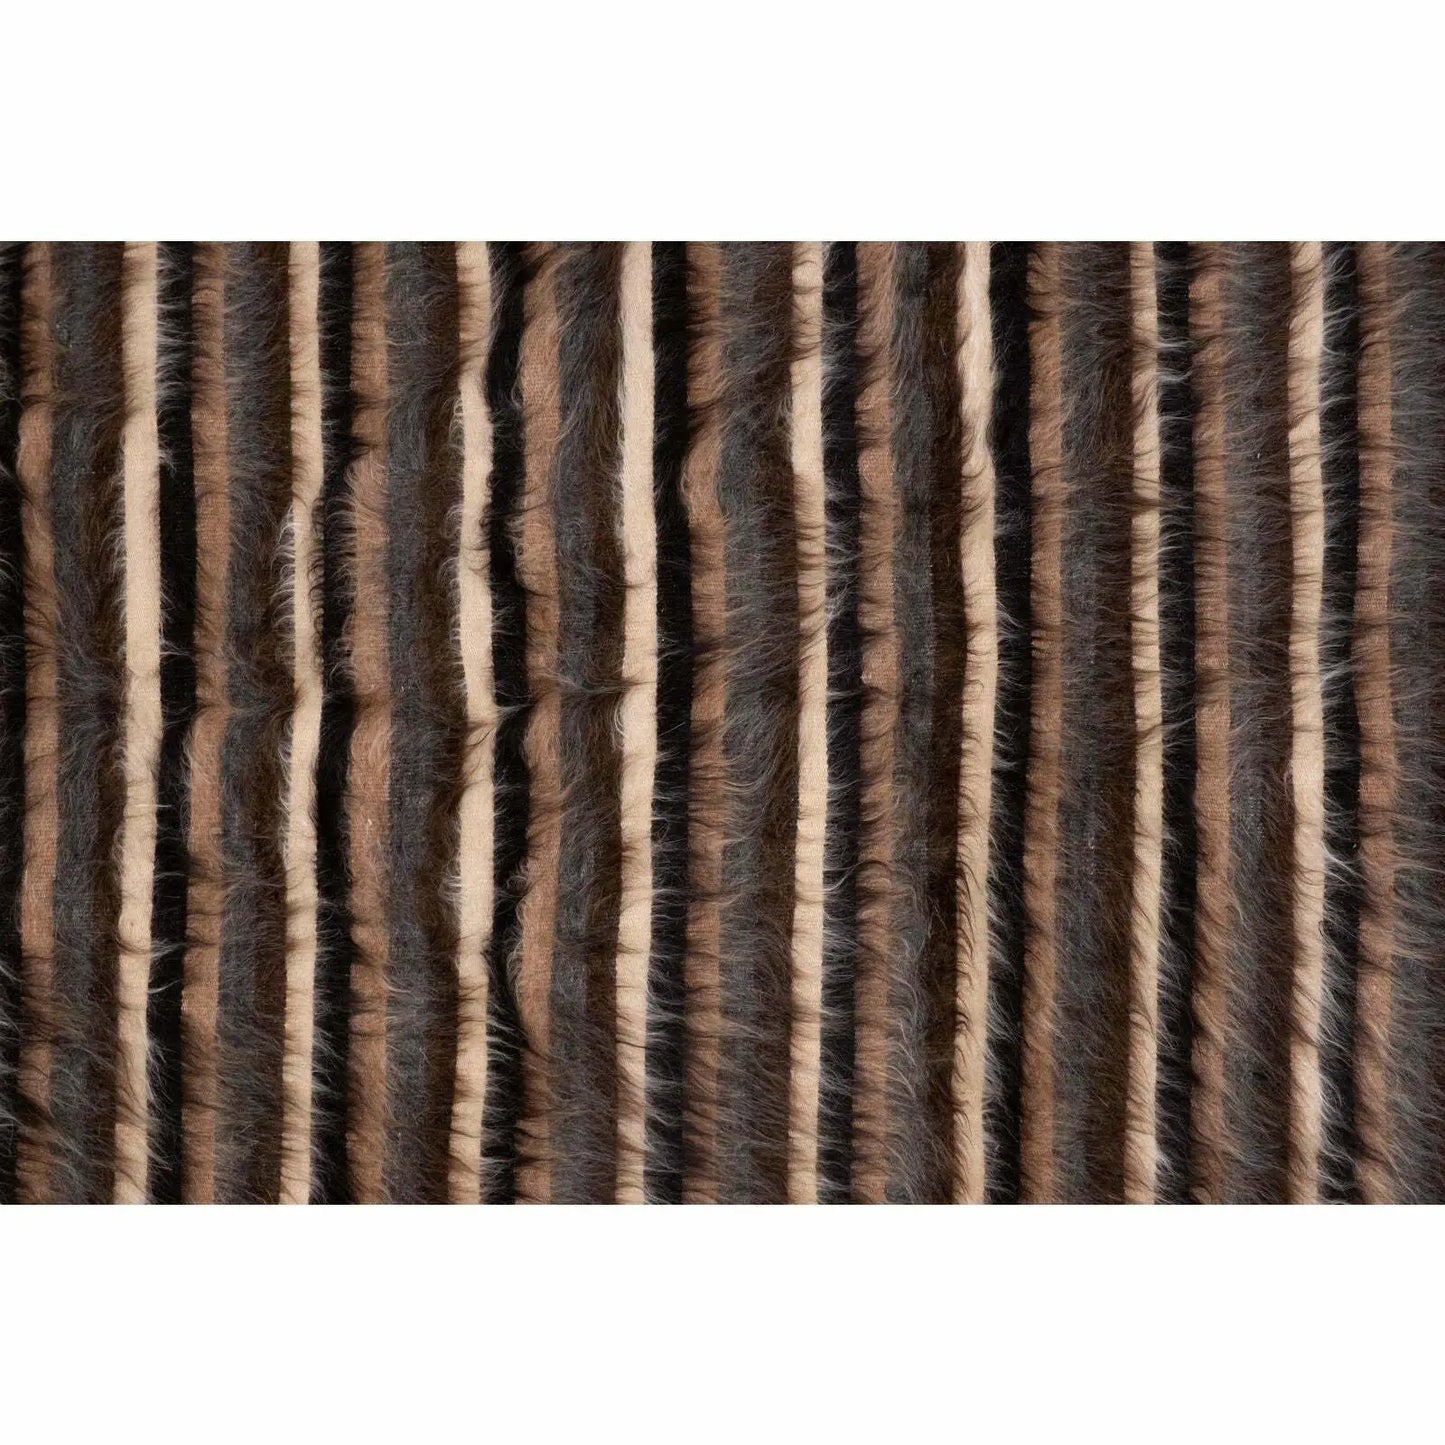 Vintage Striped Turkish Blanket